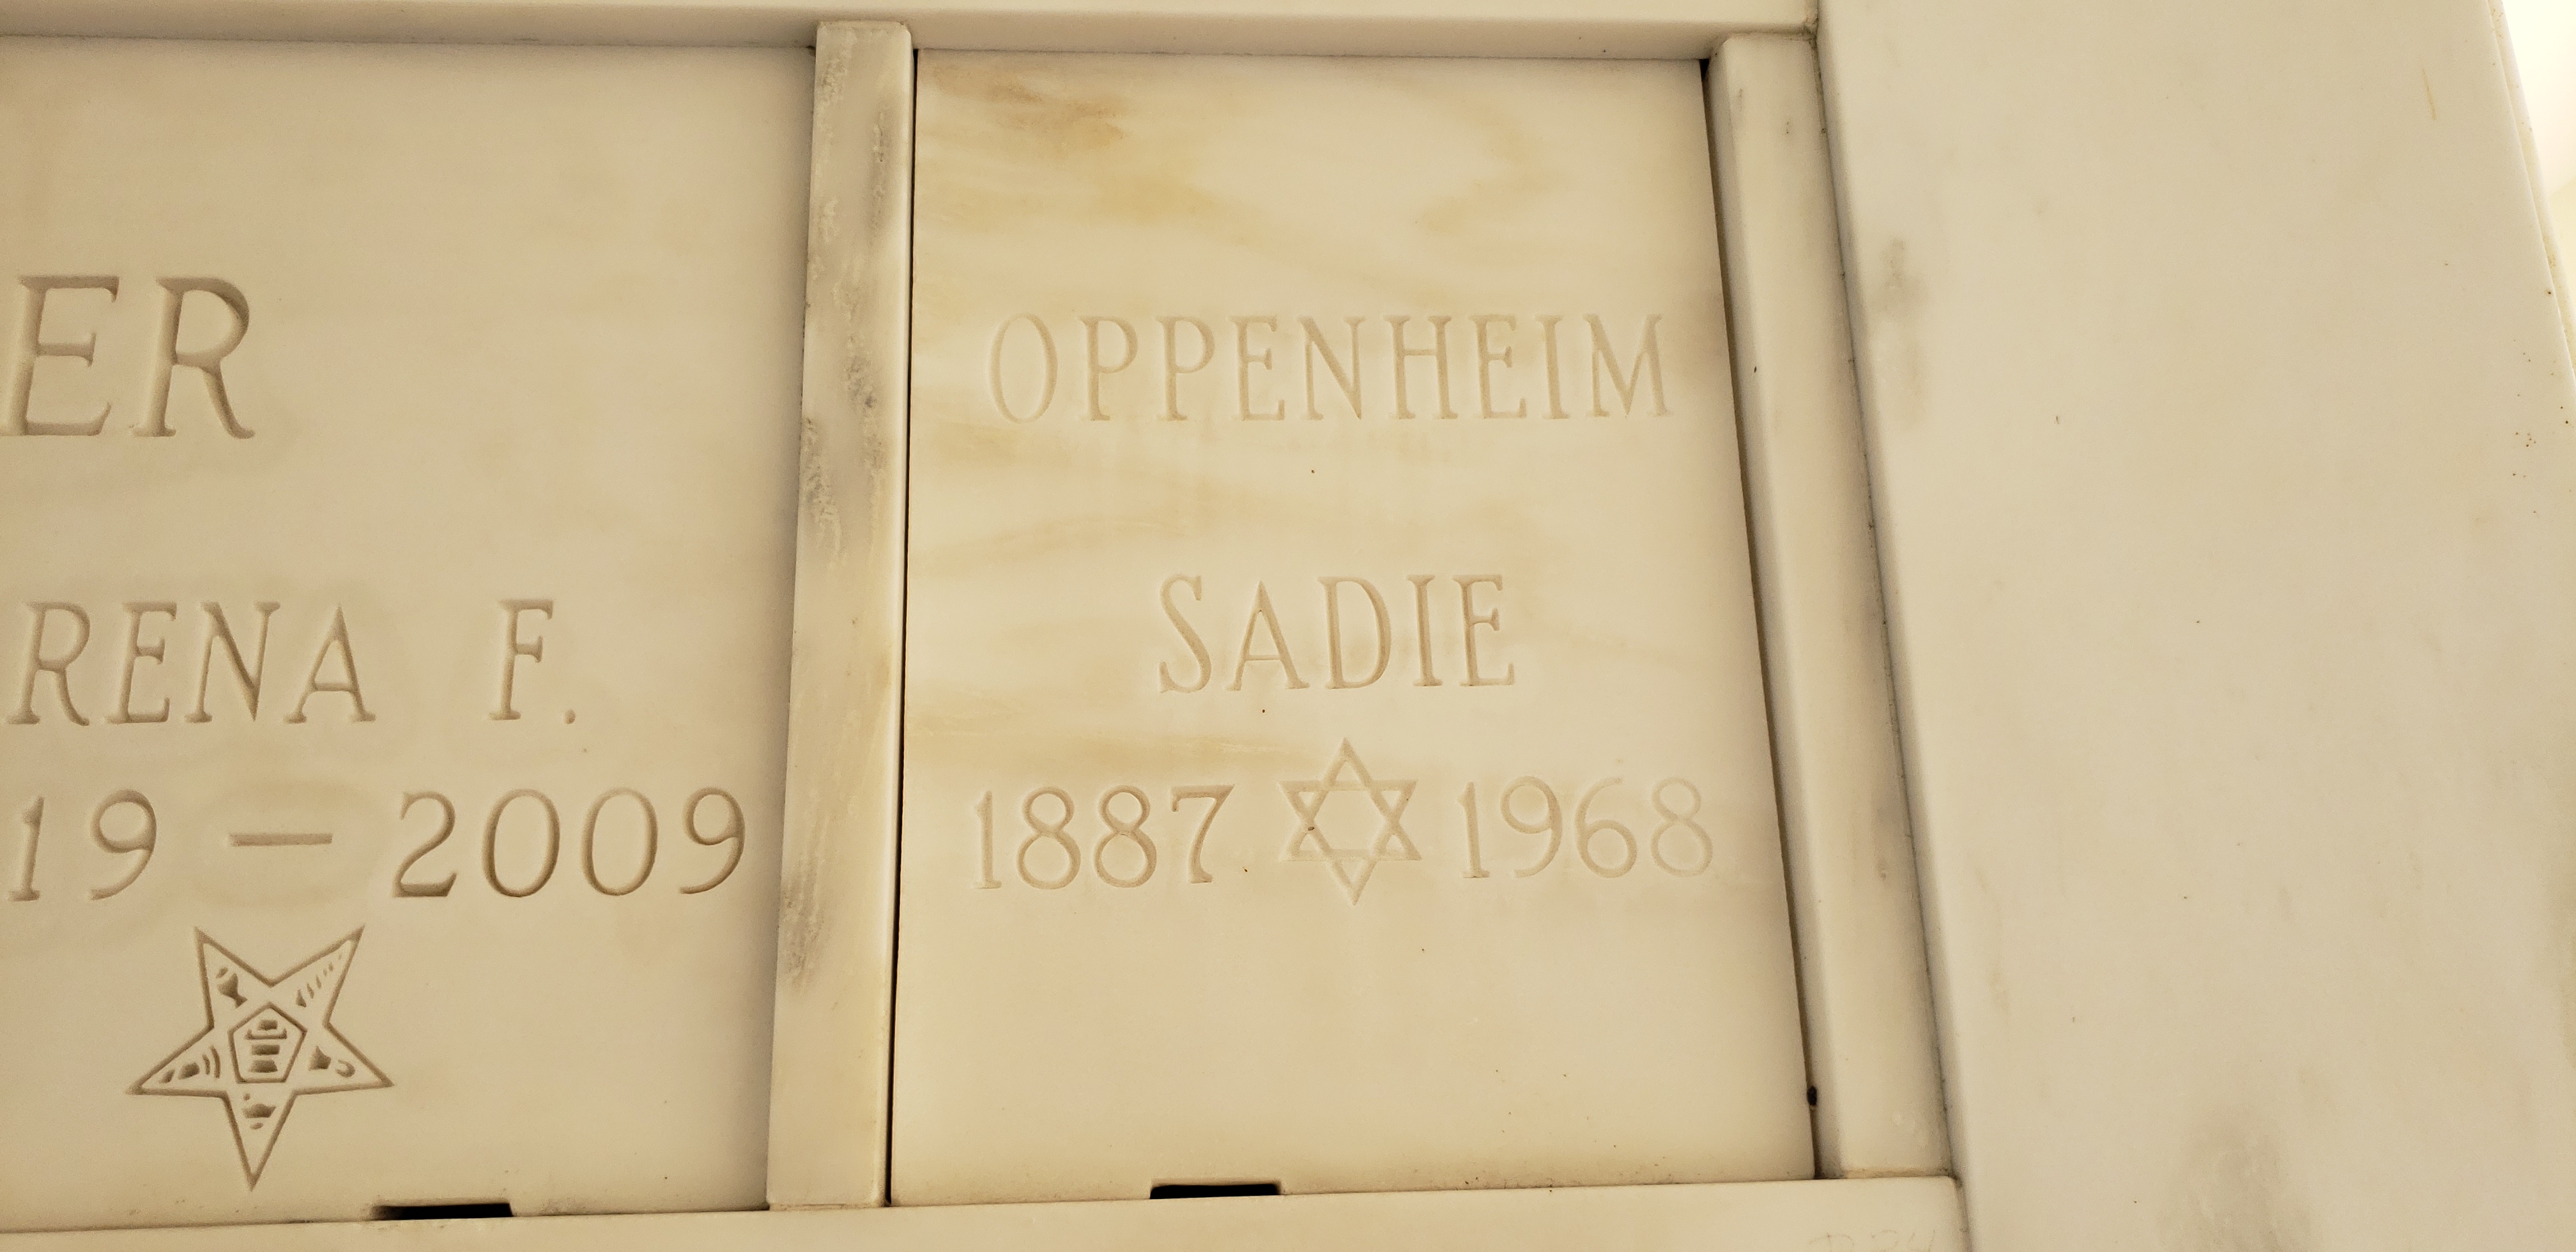 Sadie Oppenheim